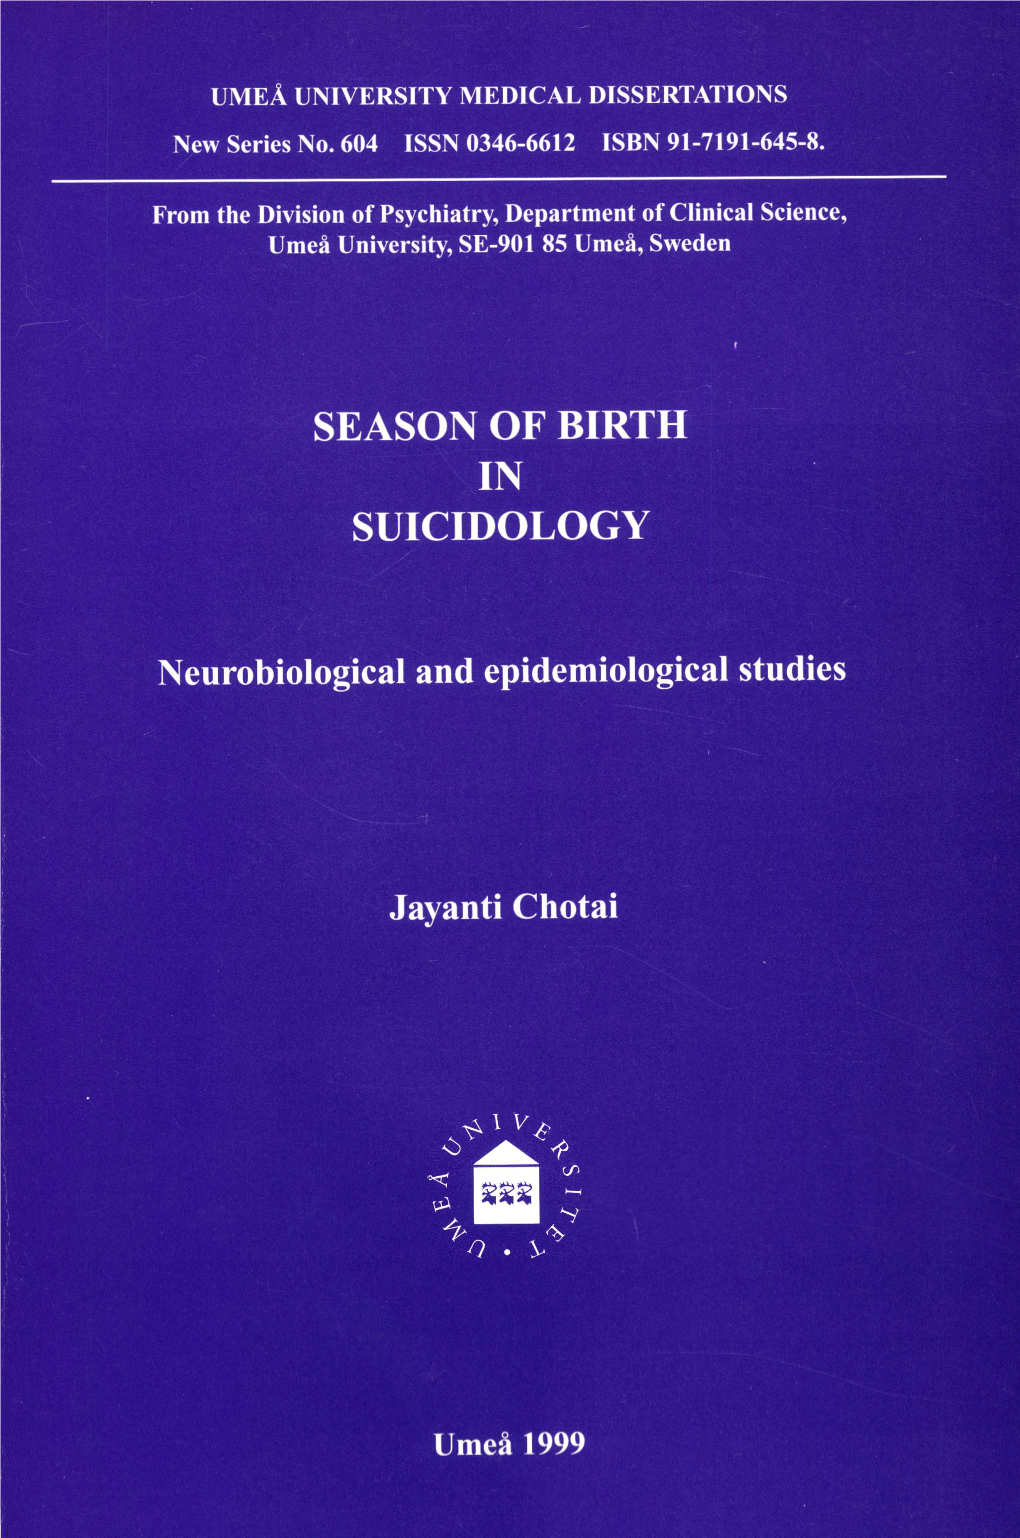 Season of Birth in Suicidology